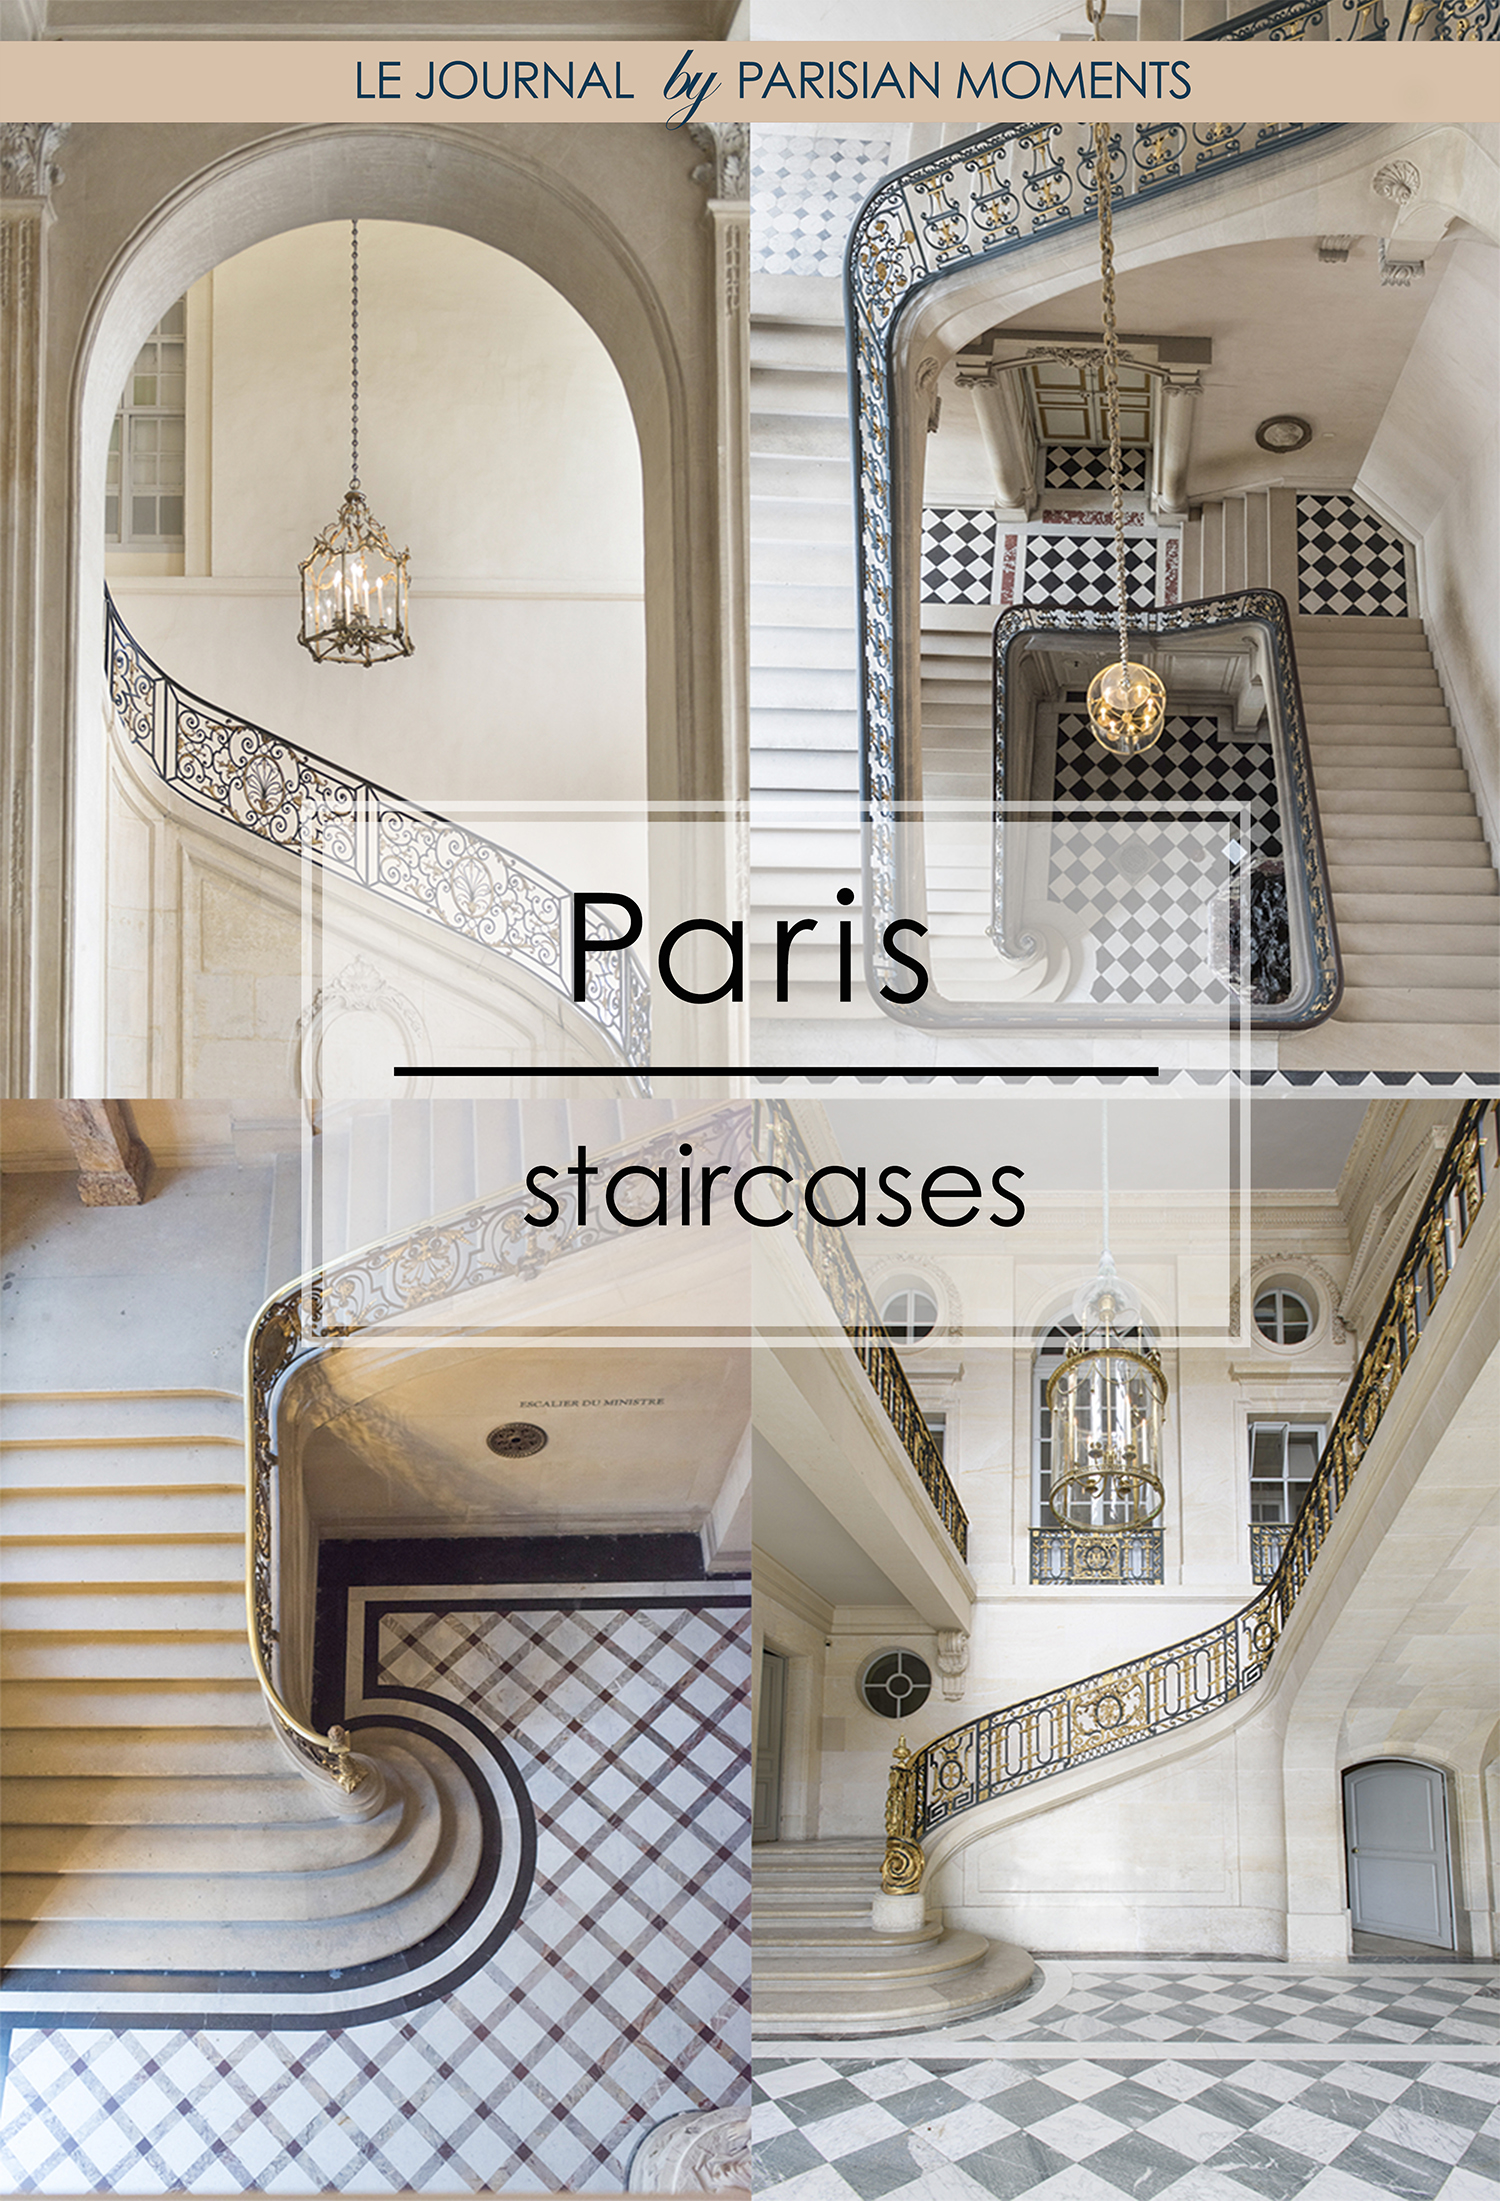 løn cabriolet respektfuld Staircases of Paris — Parisian Moments